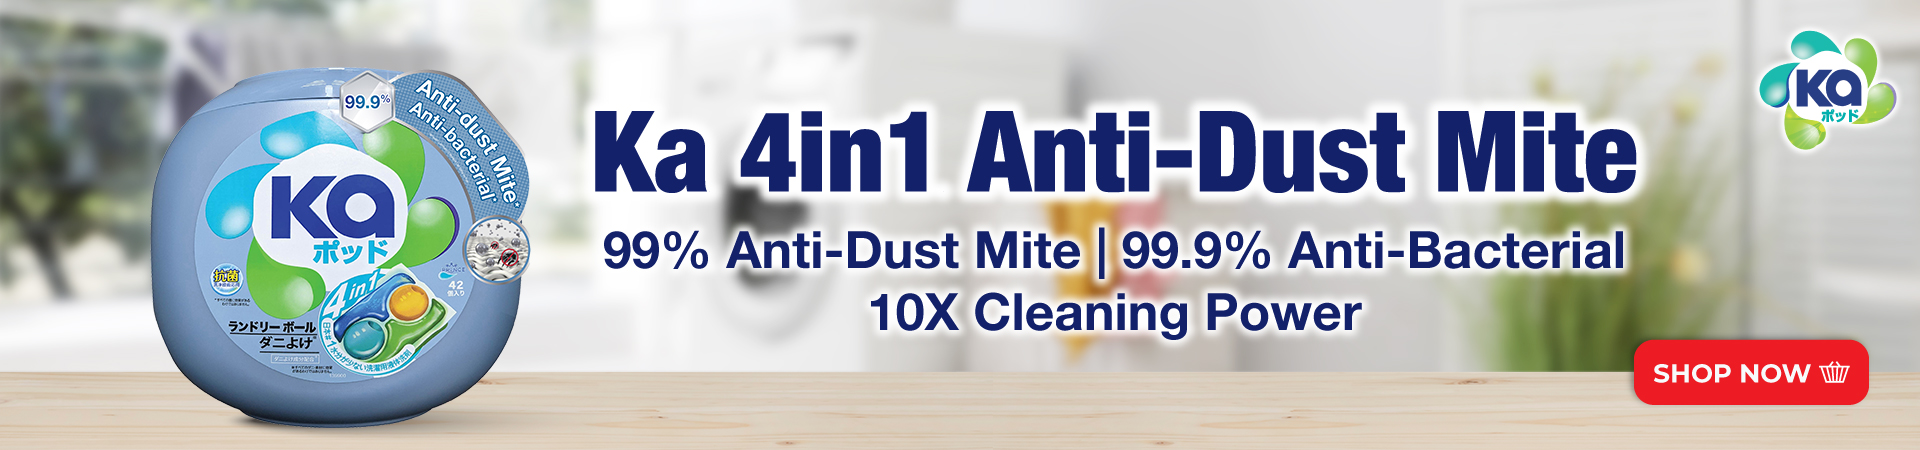 Ka 4in1 Laundry Capsules 12pcs –  Anti-Dust Mite